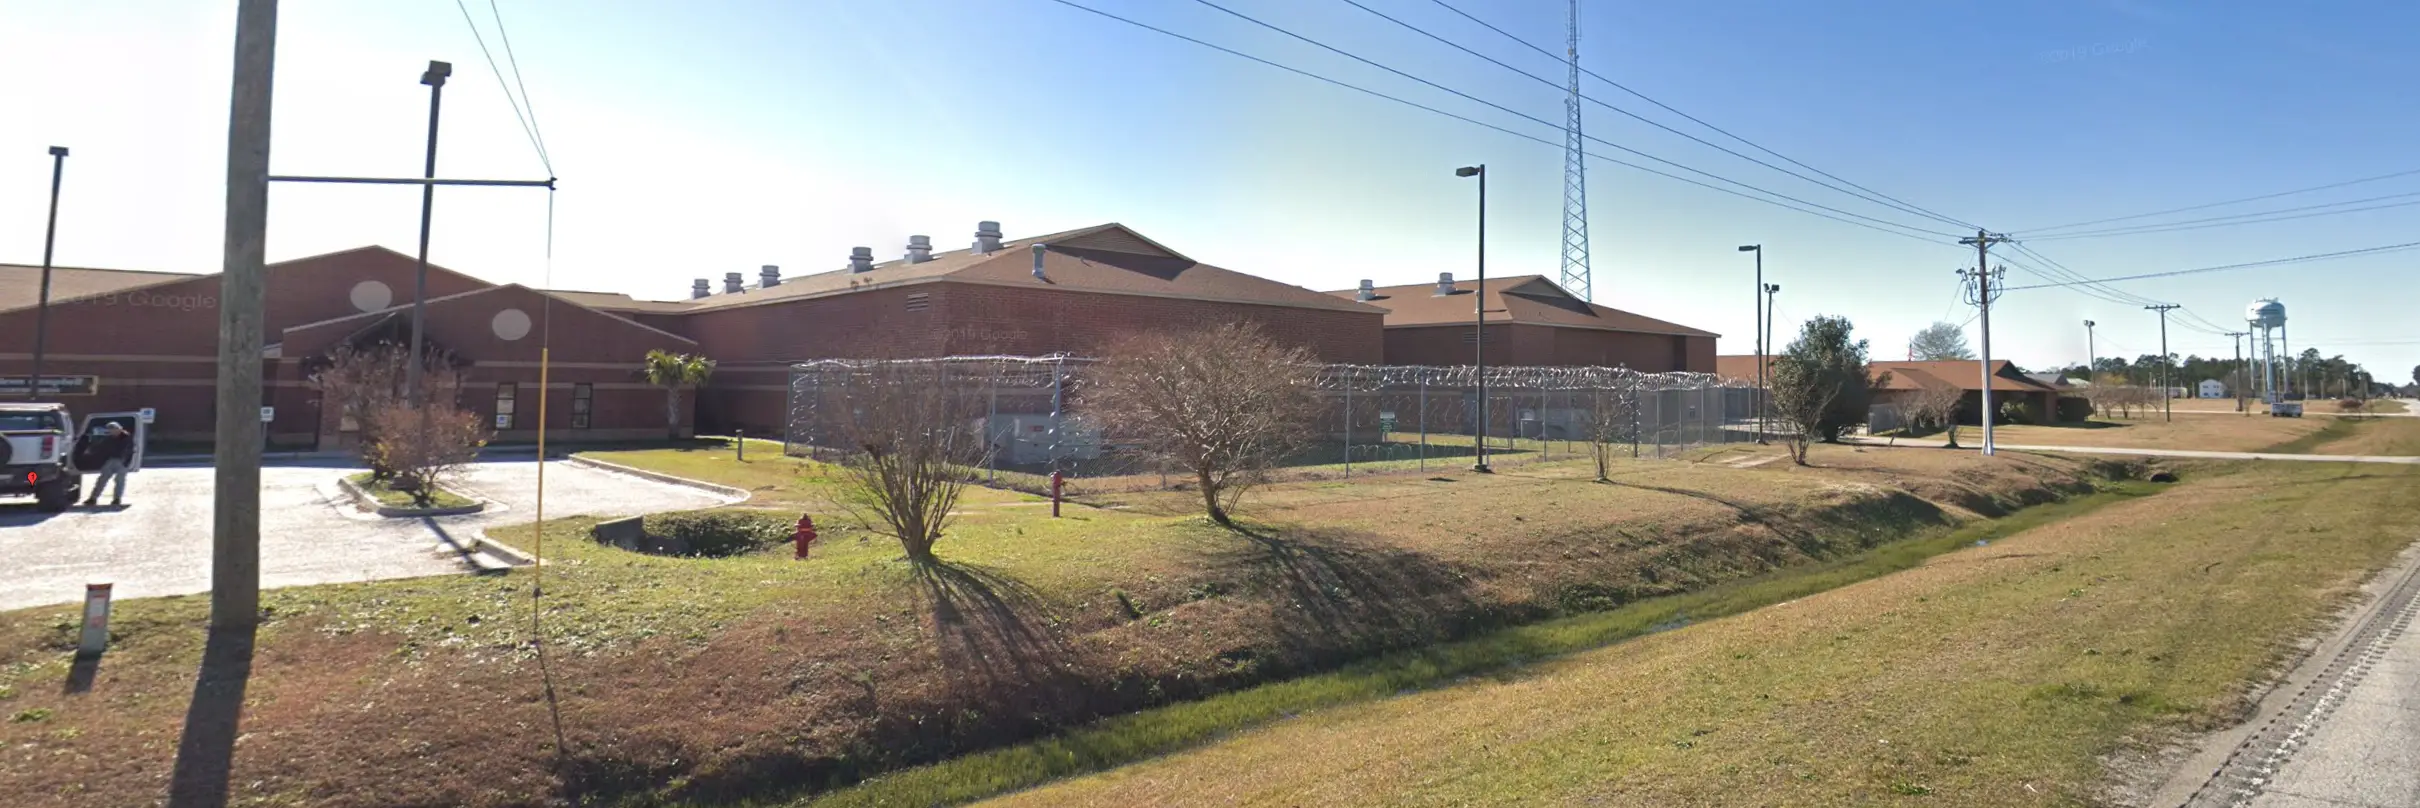 Photos Darlington County Detention Center 1